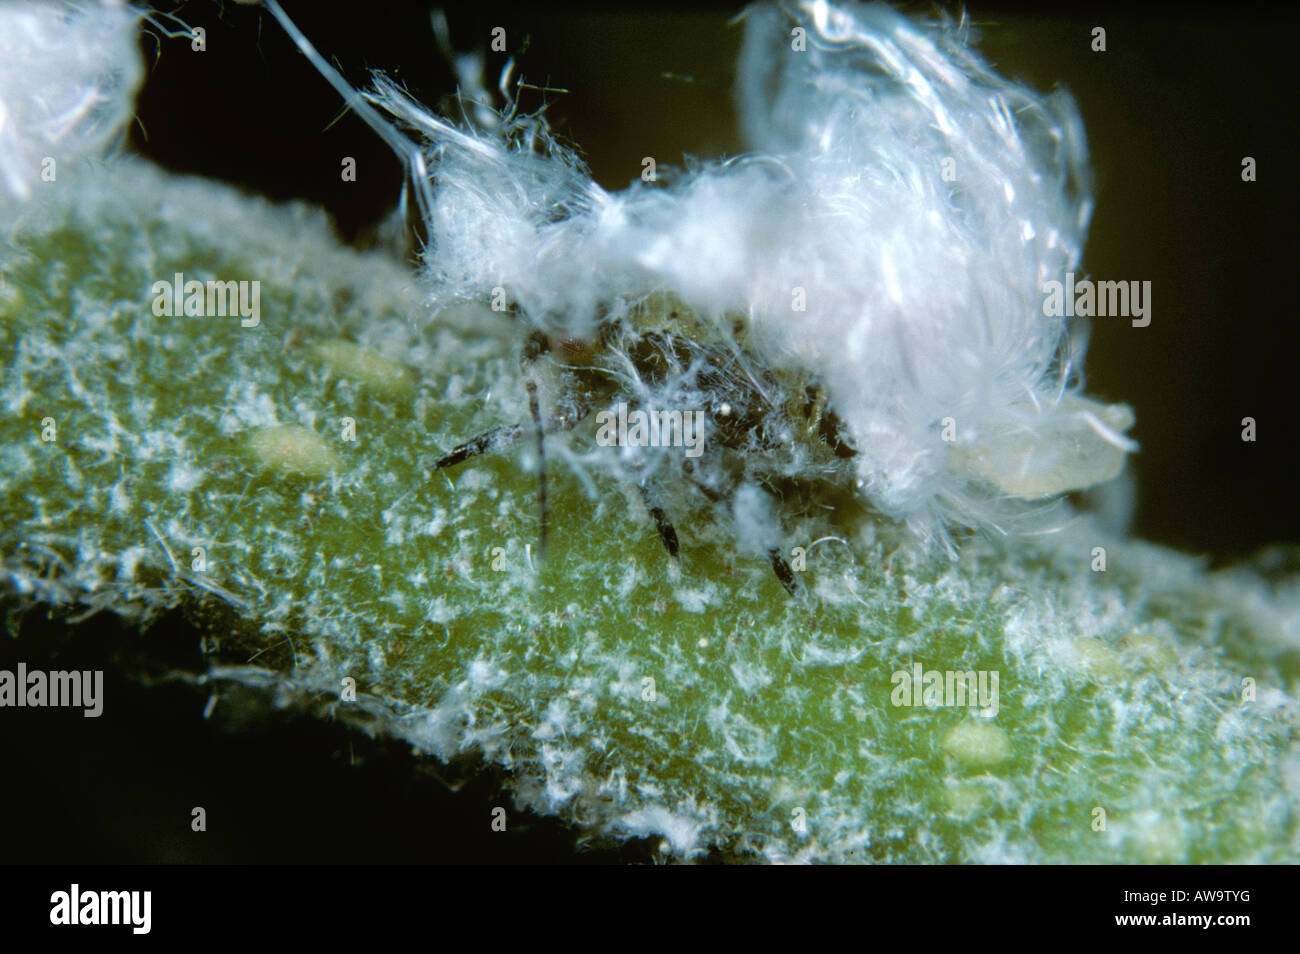 Alder psyllid Psylla alni nymph with waxy secretion on an alder stem Stock Photo